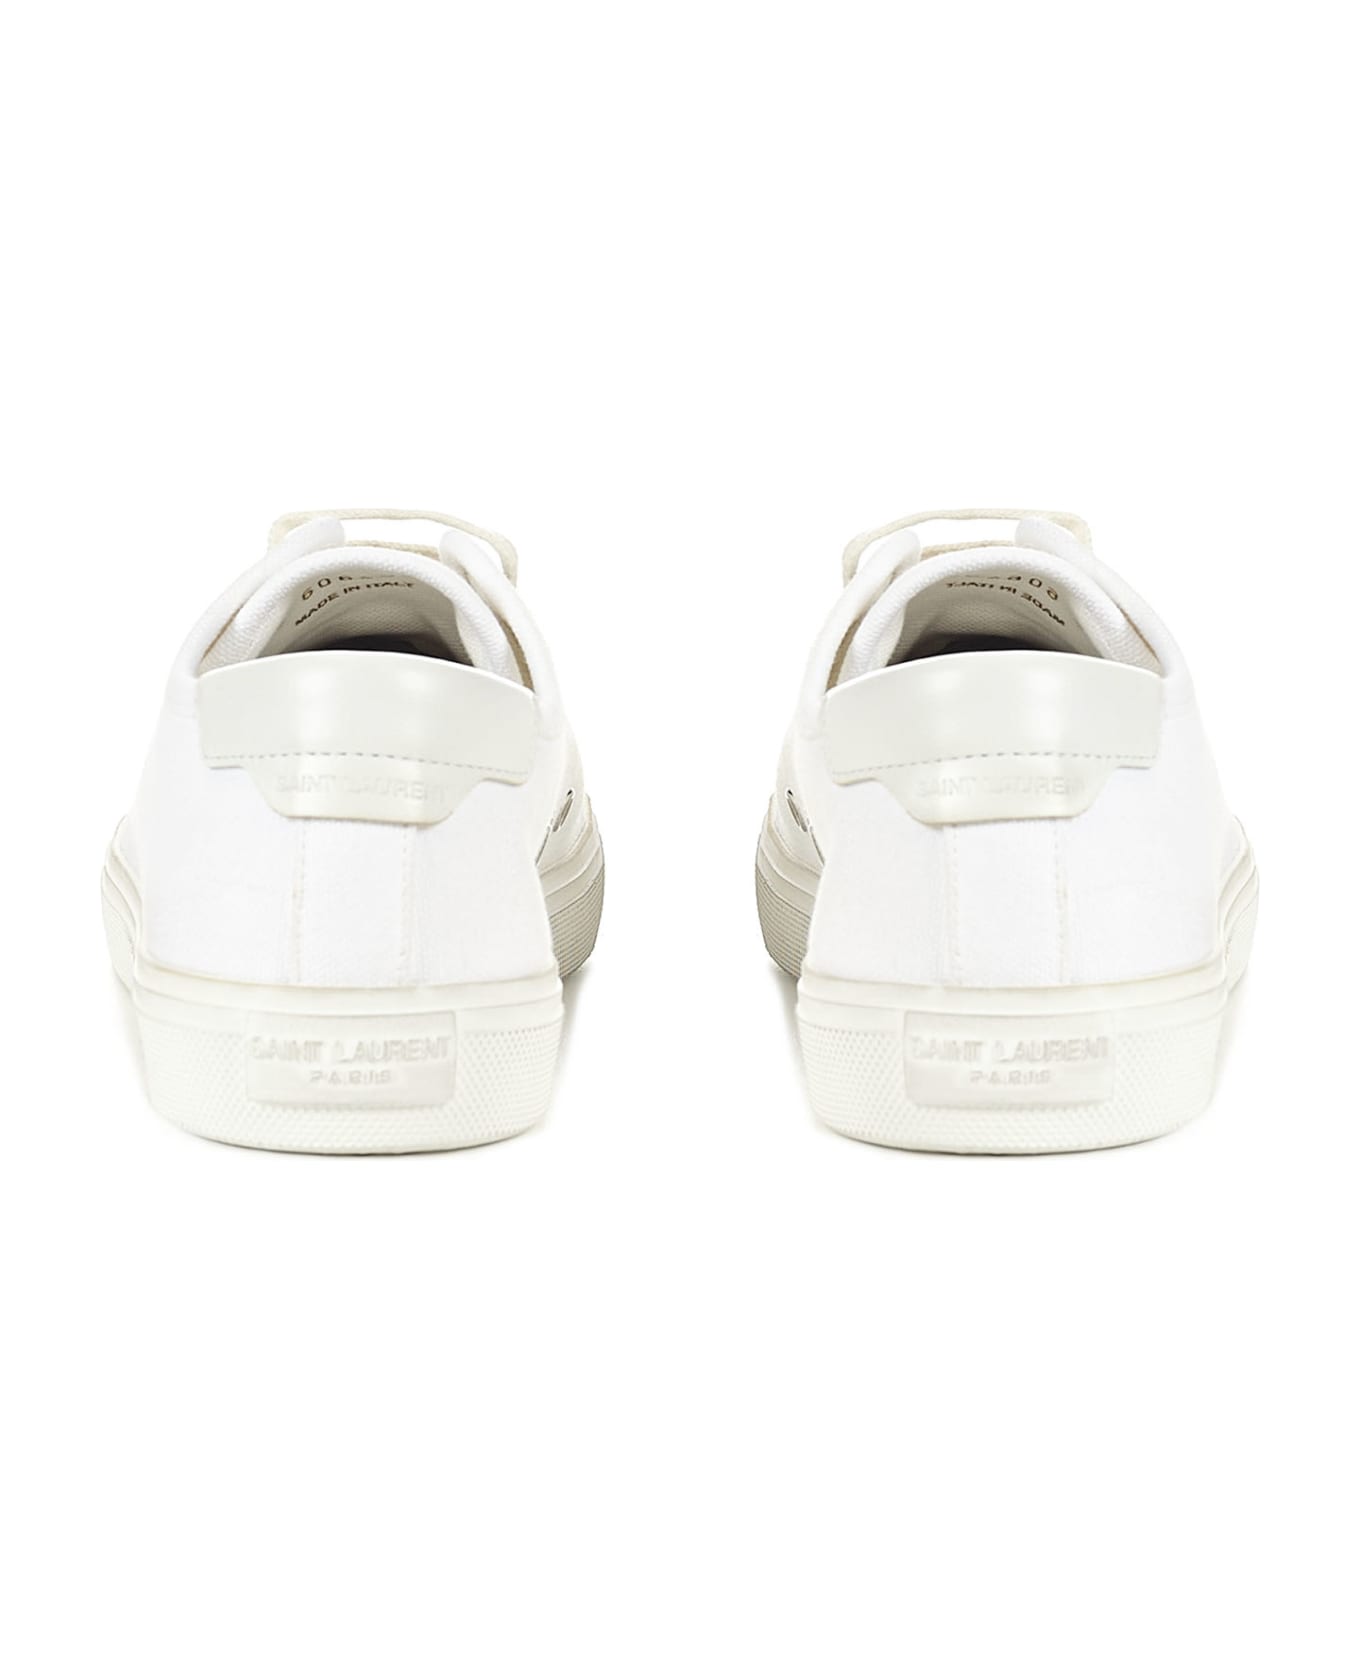 Saint Laurent Malibu Sneakers - White スニーカー